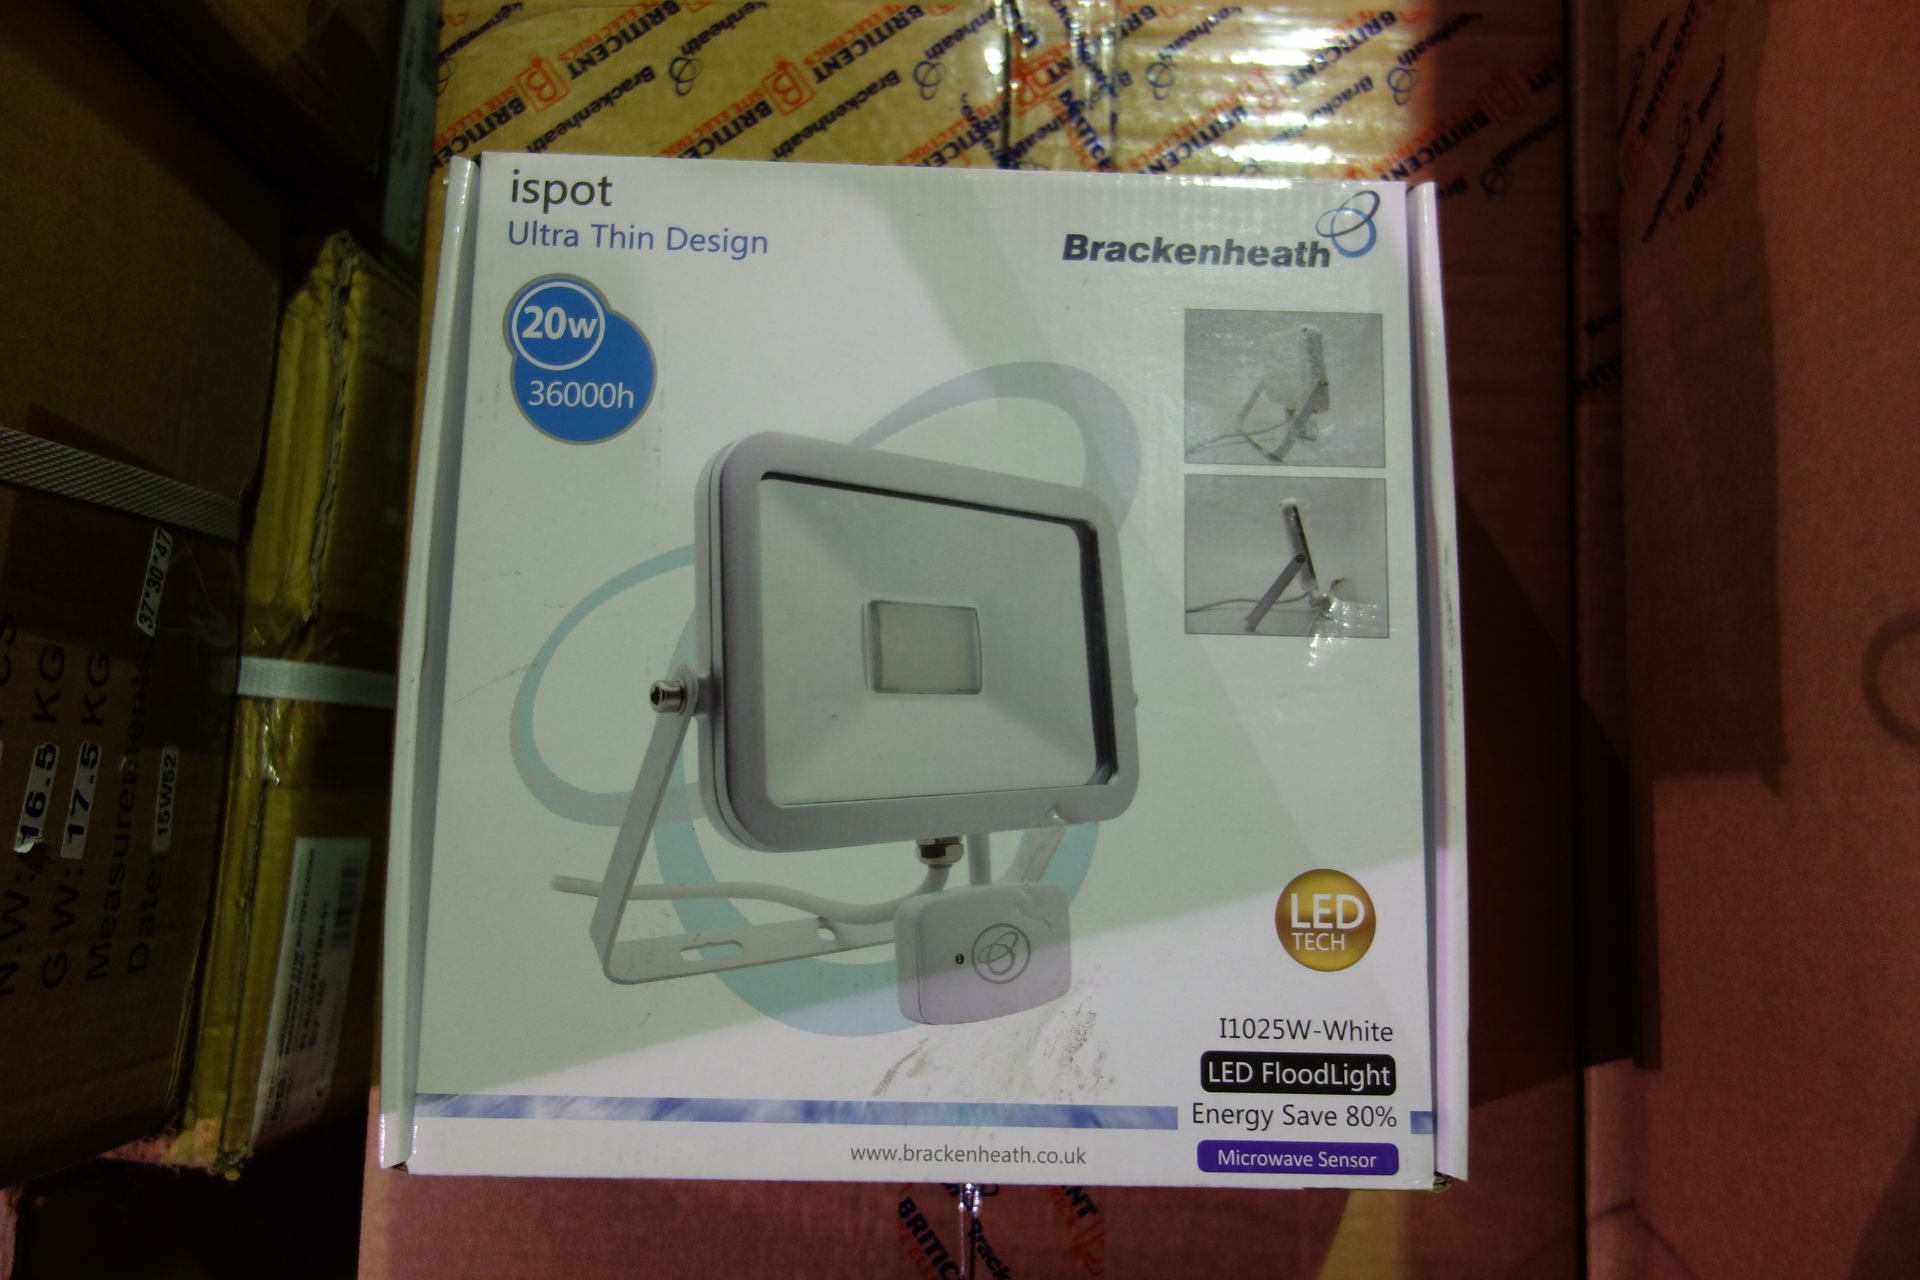 10 X Brakenheath I 1025W-White LED Floodlight 20W 36000H With Microwave Sensor